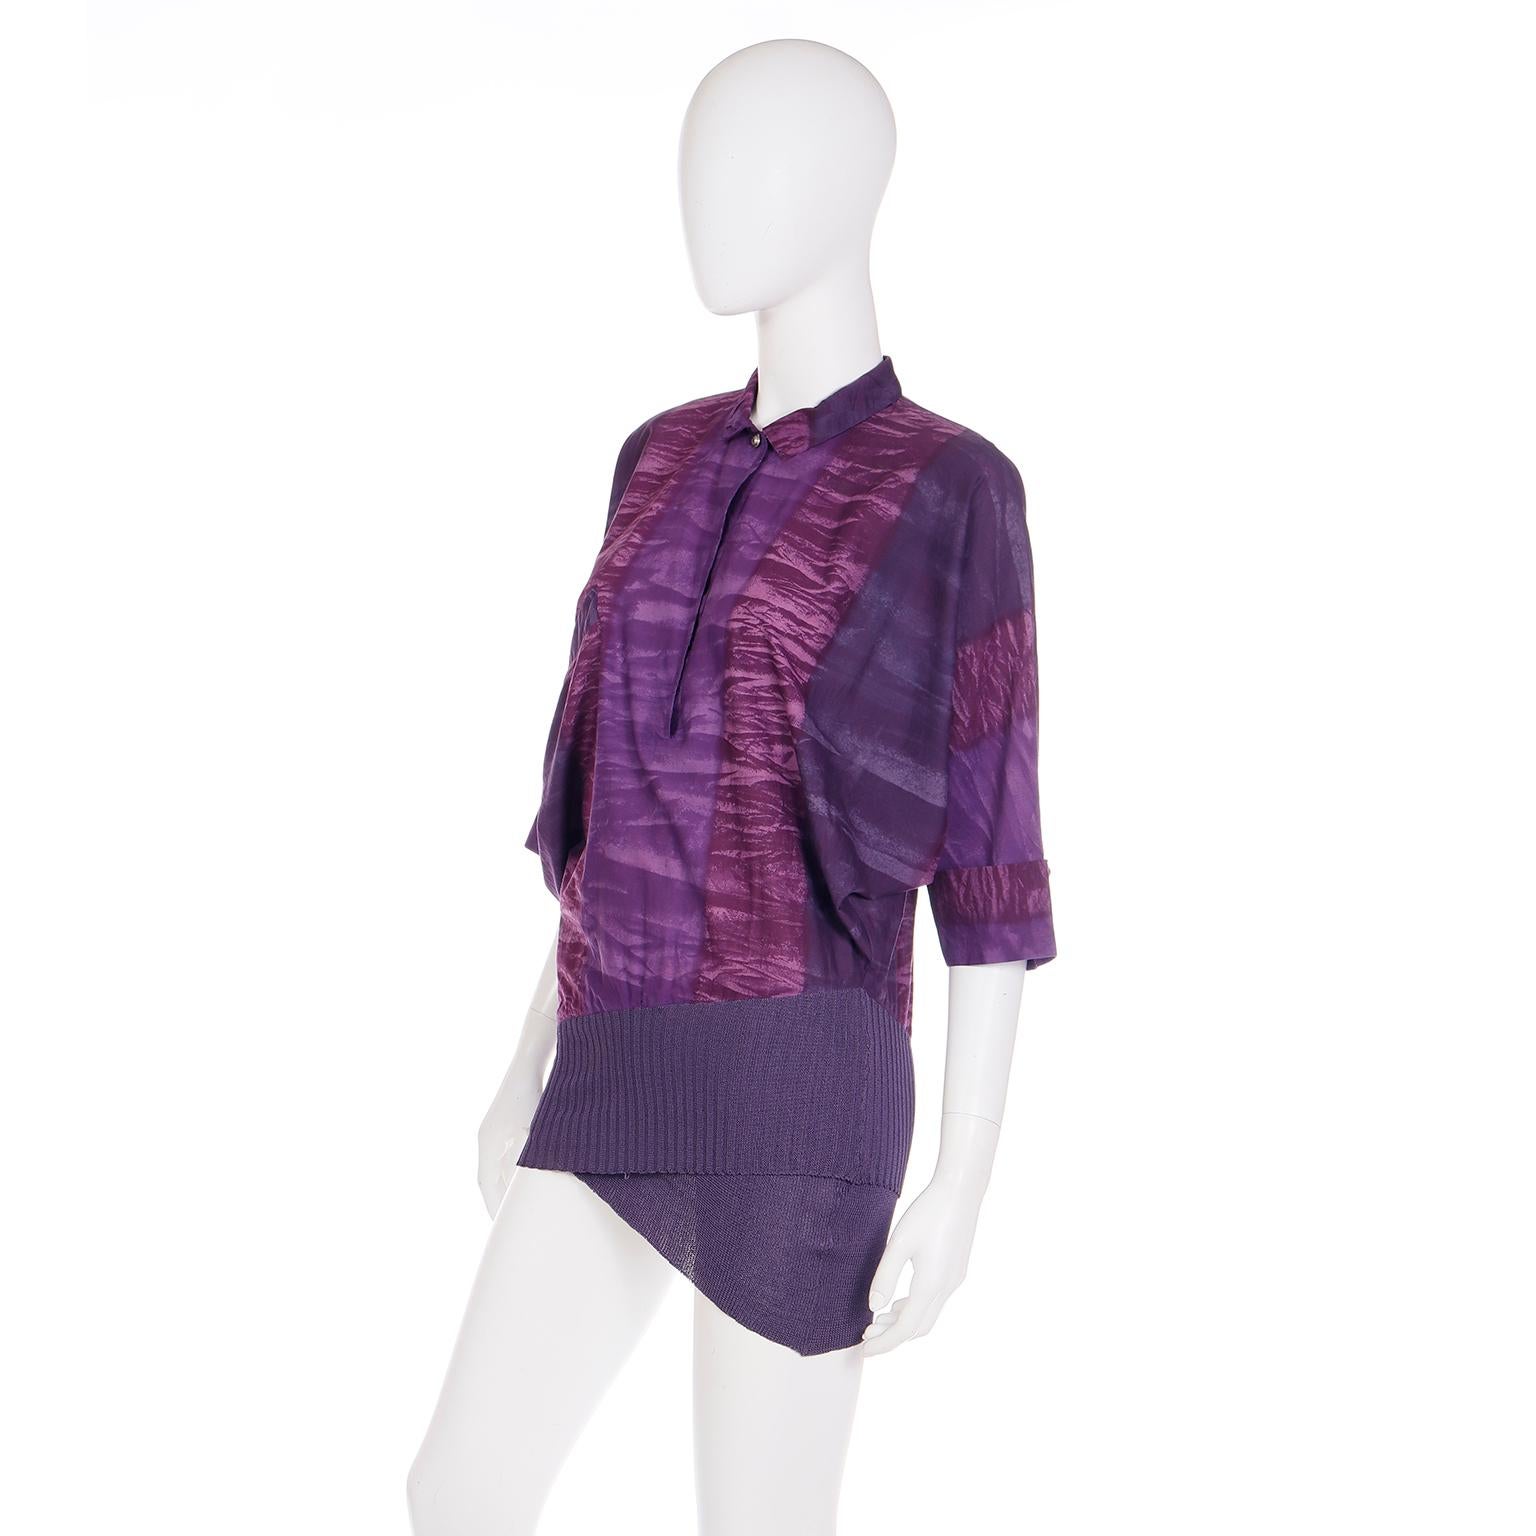 Gianni Versace 1980s Asymmetrical Top Purple Abstract Print Shirt w Knit Trim For Sale 1